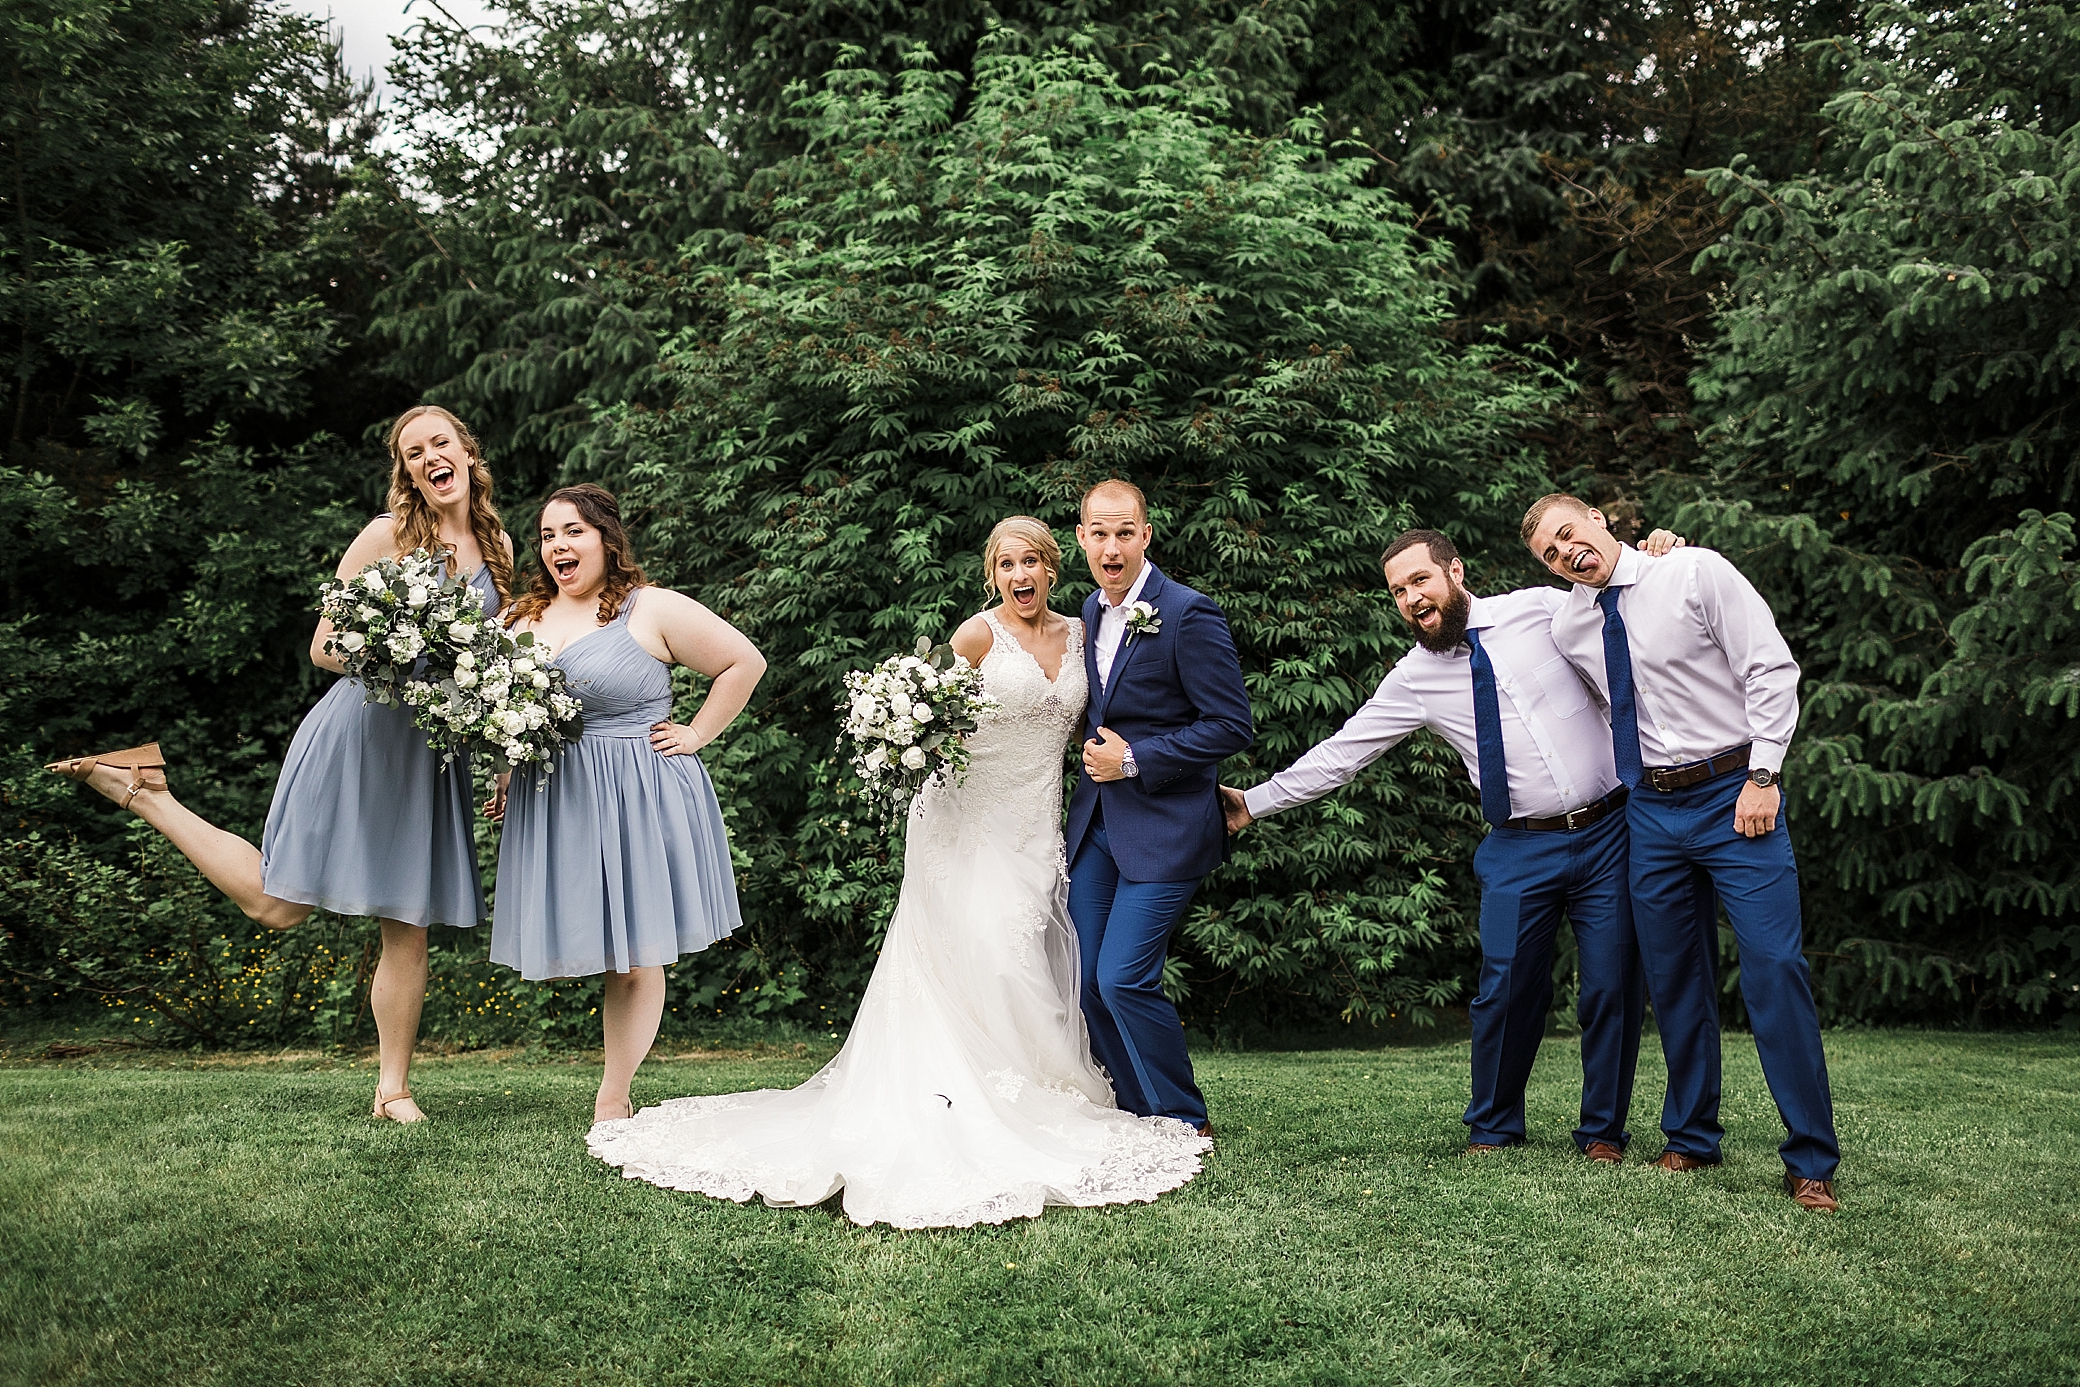 Wedding Party Photos at Willow Lodge | Megan Montalvo Photography 